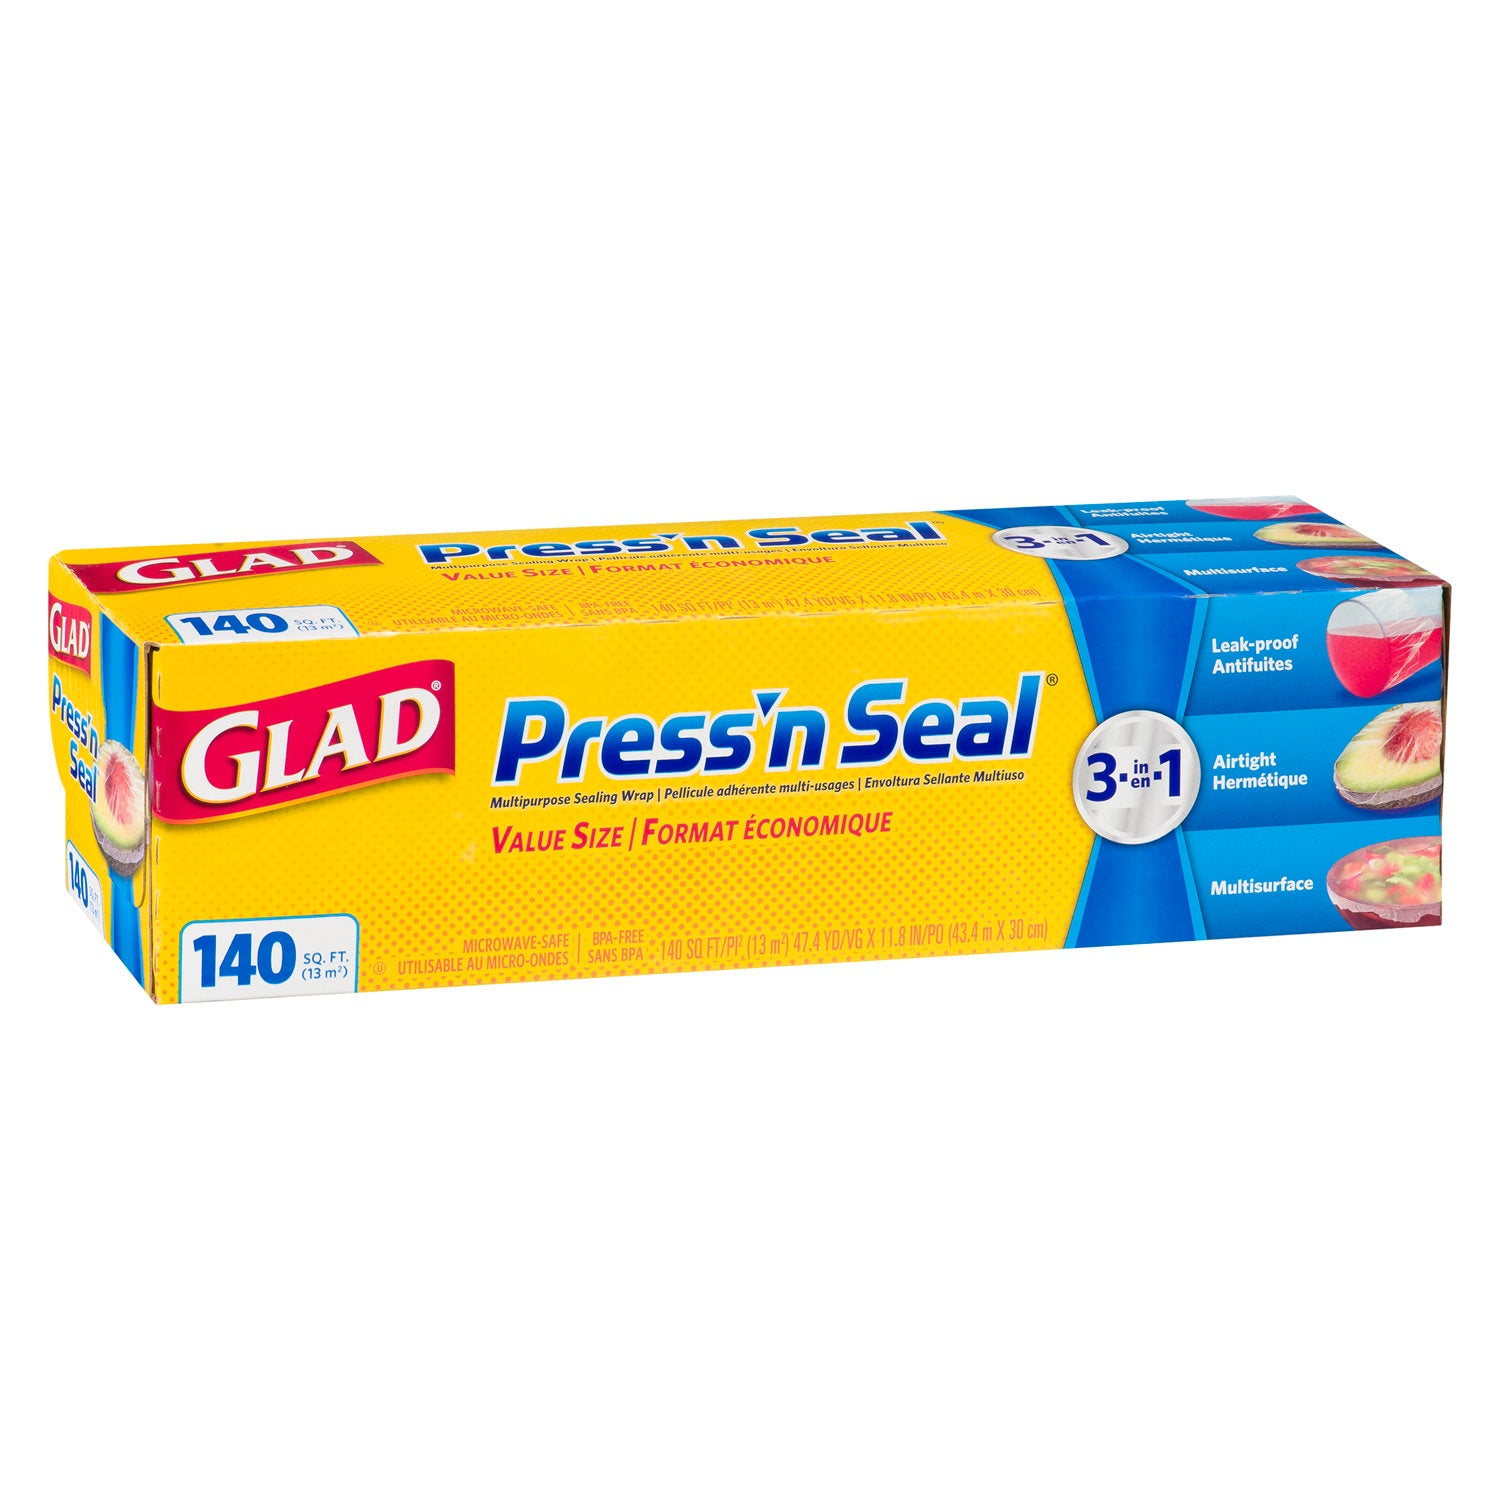 Glad Press'n Seal Plastic Wrap 43.4mx30cm(140SQFT)